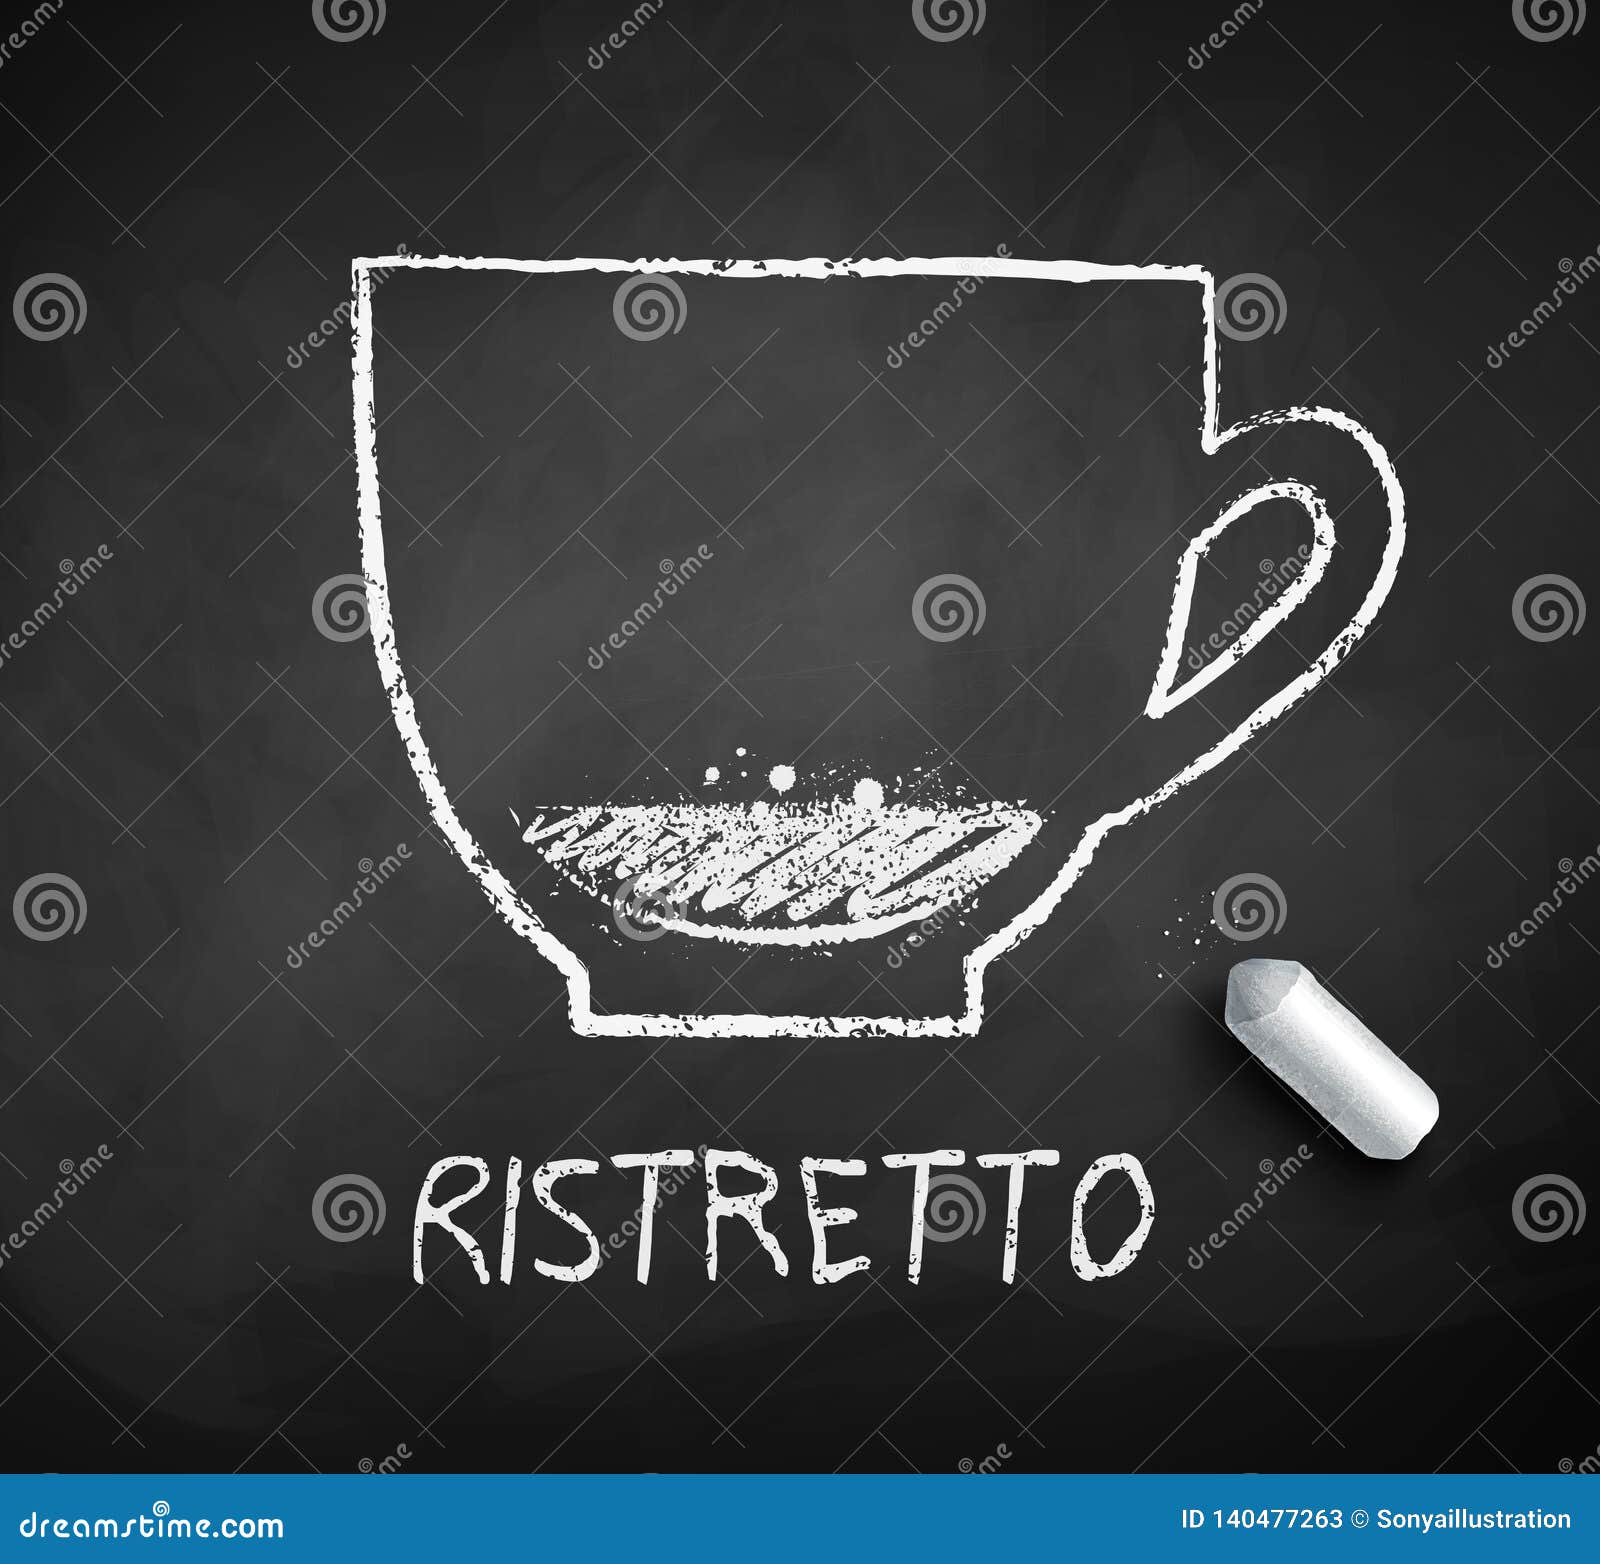 black and white sketch of ristretto coffee